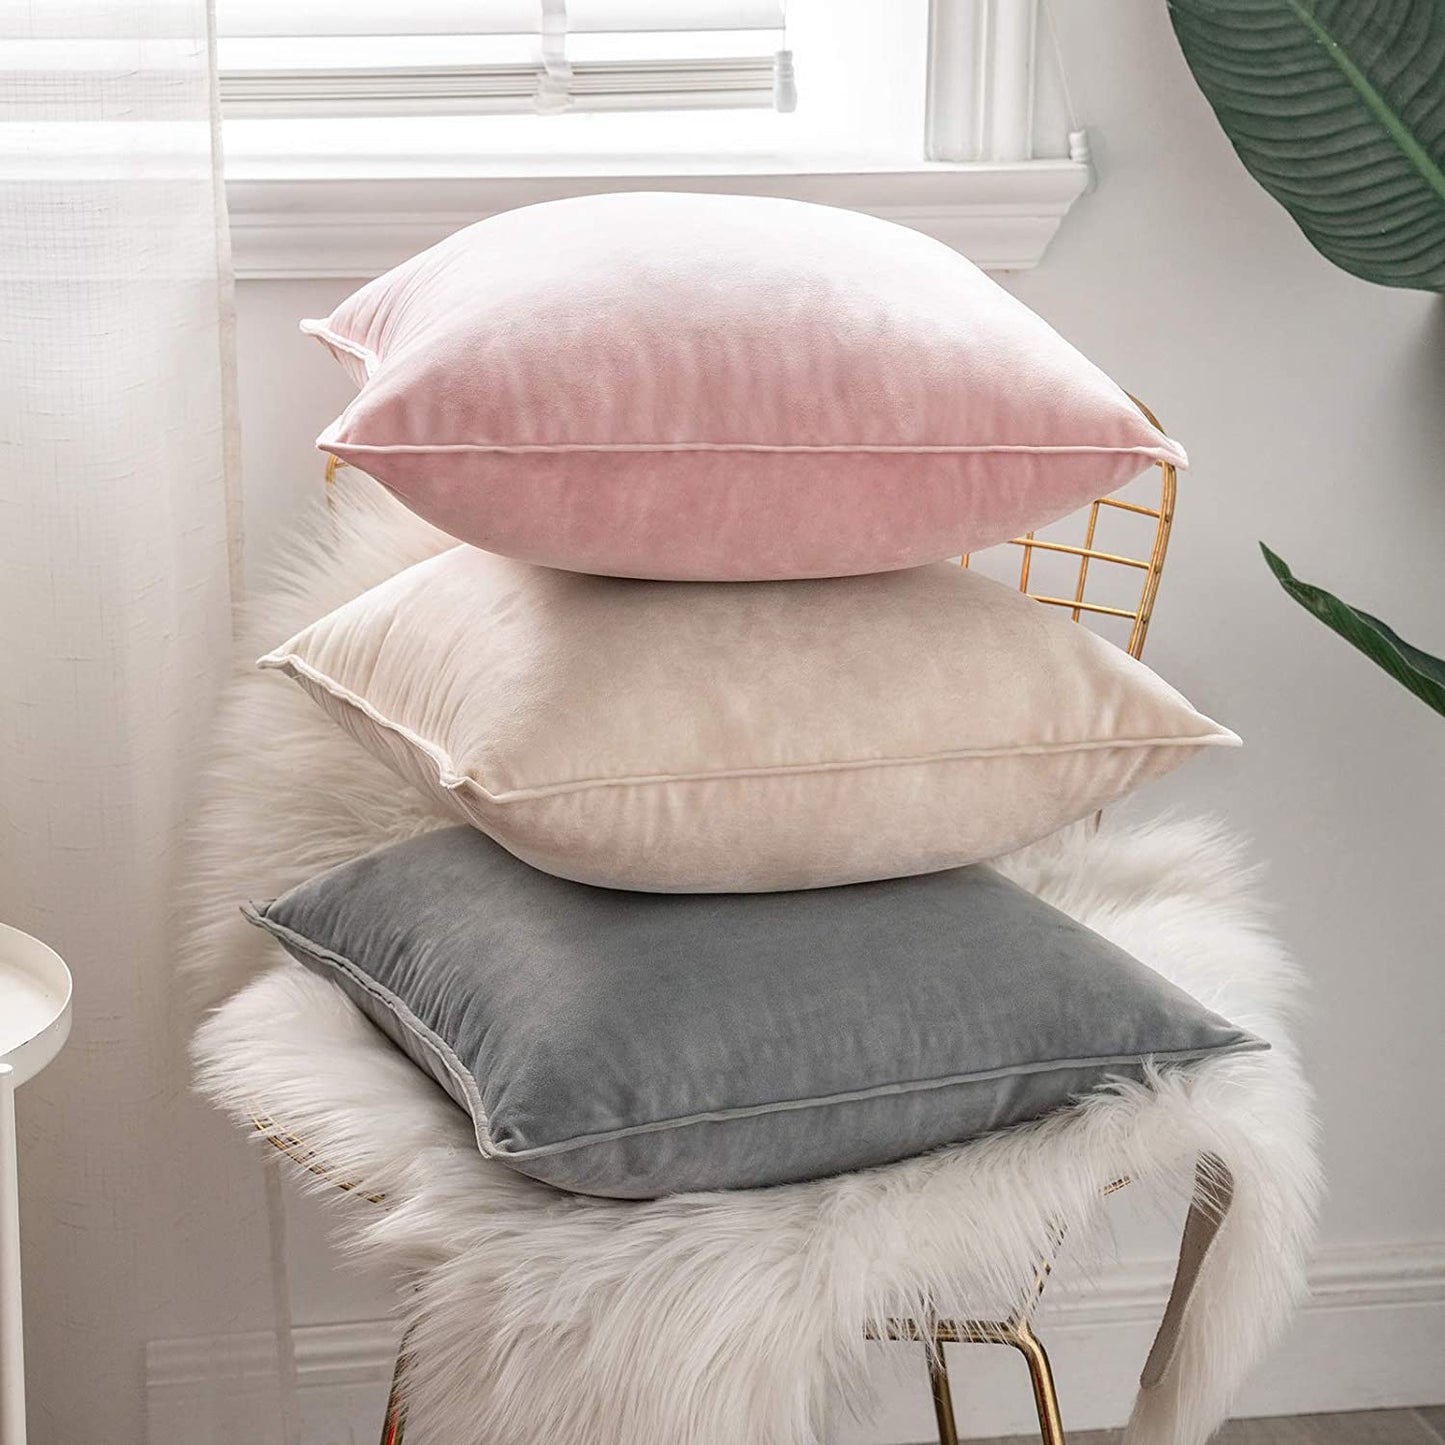 Love Edition Velvet Decorative Pillow Covers - 18x18